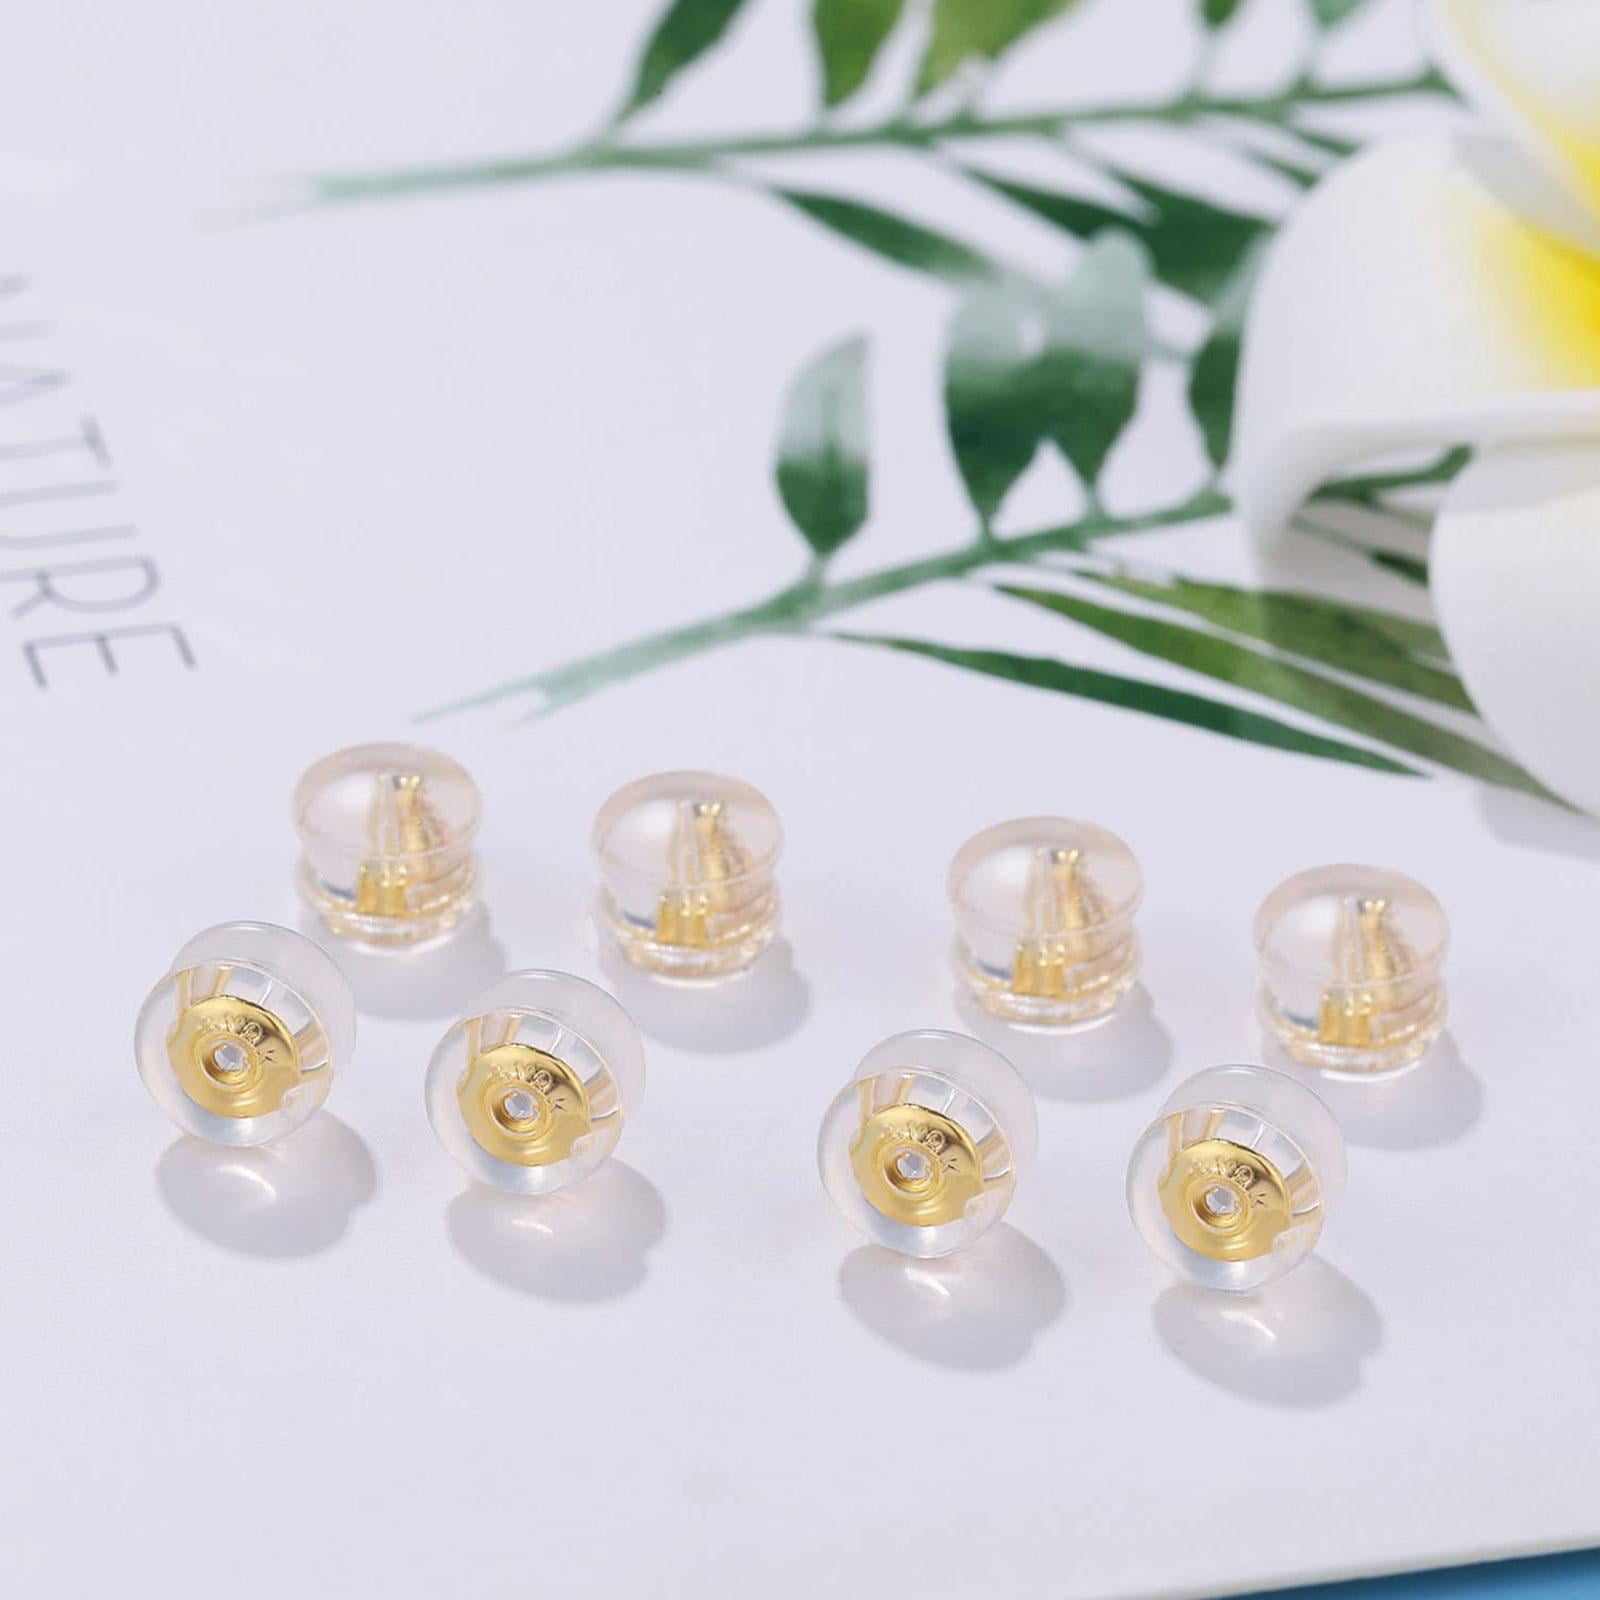 Gold Locking Secure Earring Backs for Studs, Silicone Earring Backs  Replacements for Studs/Droopy Ears, No-Irritate Hypoallergenice Earring  Backs for